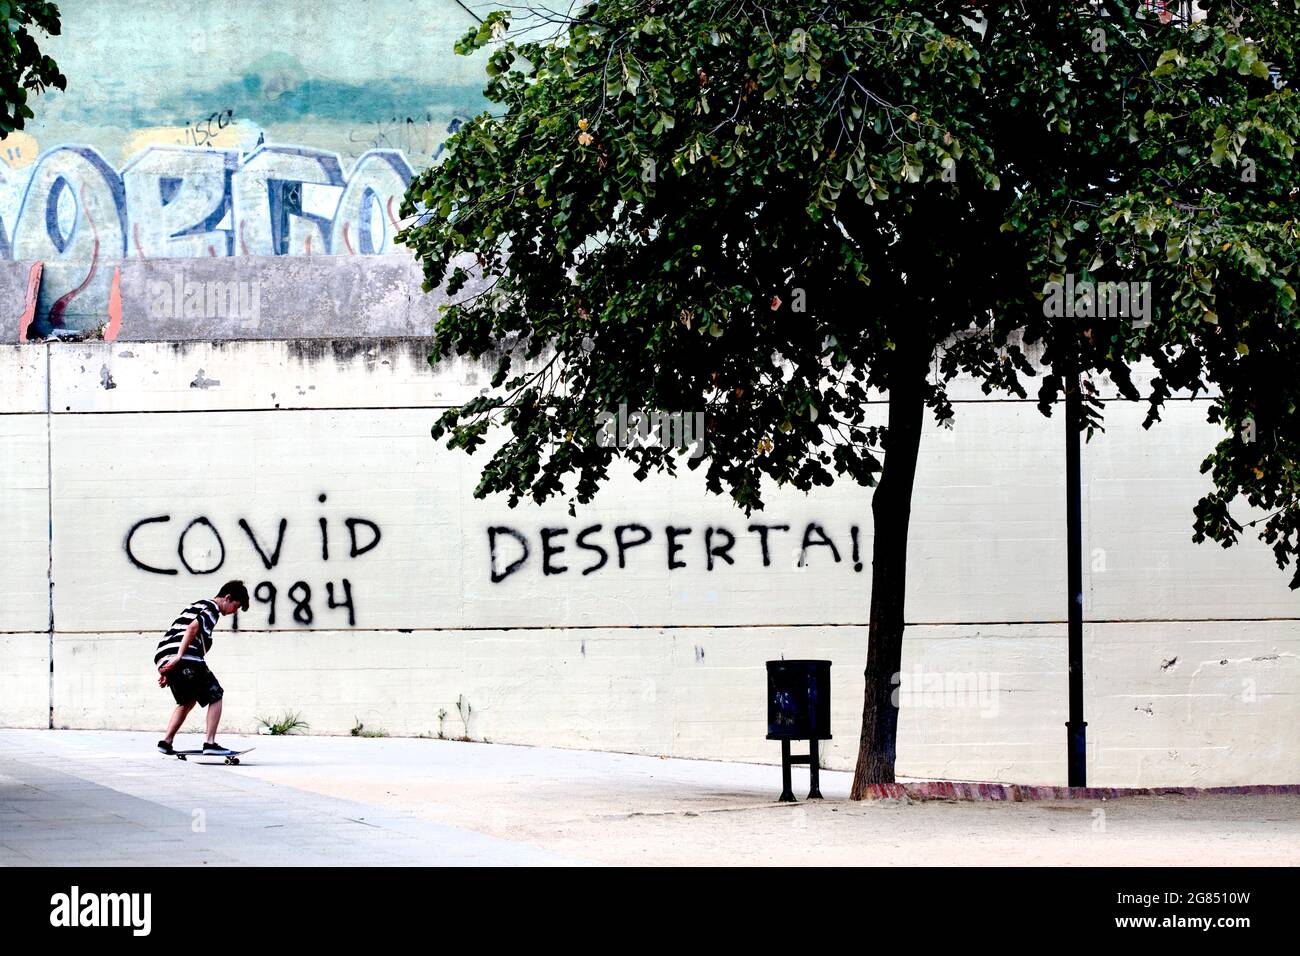 Teenage boy skateboarding in front of Covid-19 graffiti, Barcelona, Spain. Stock Photo